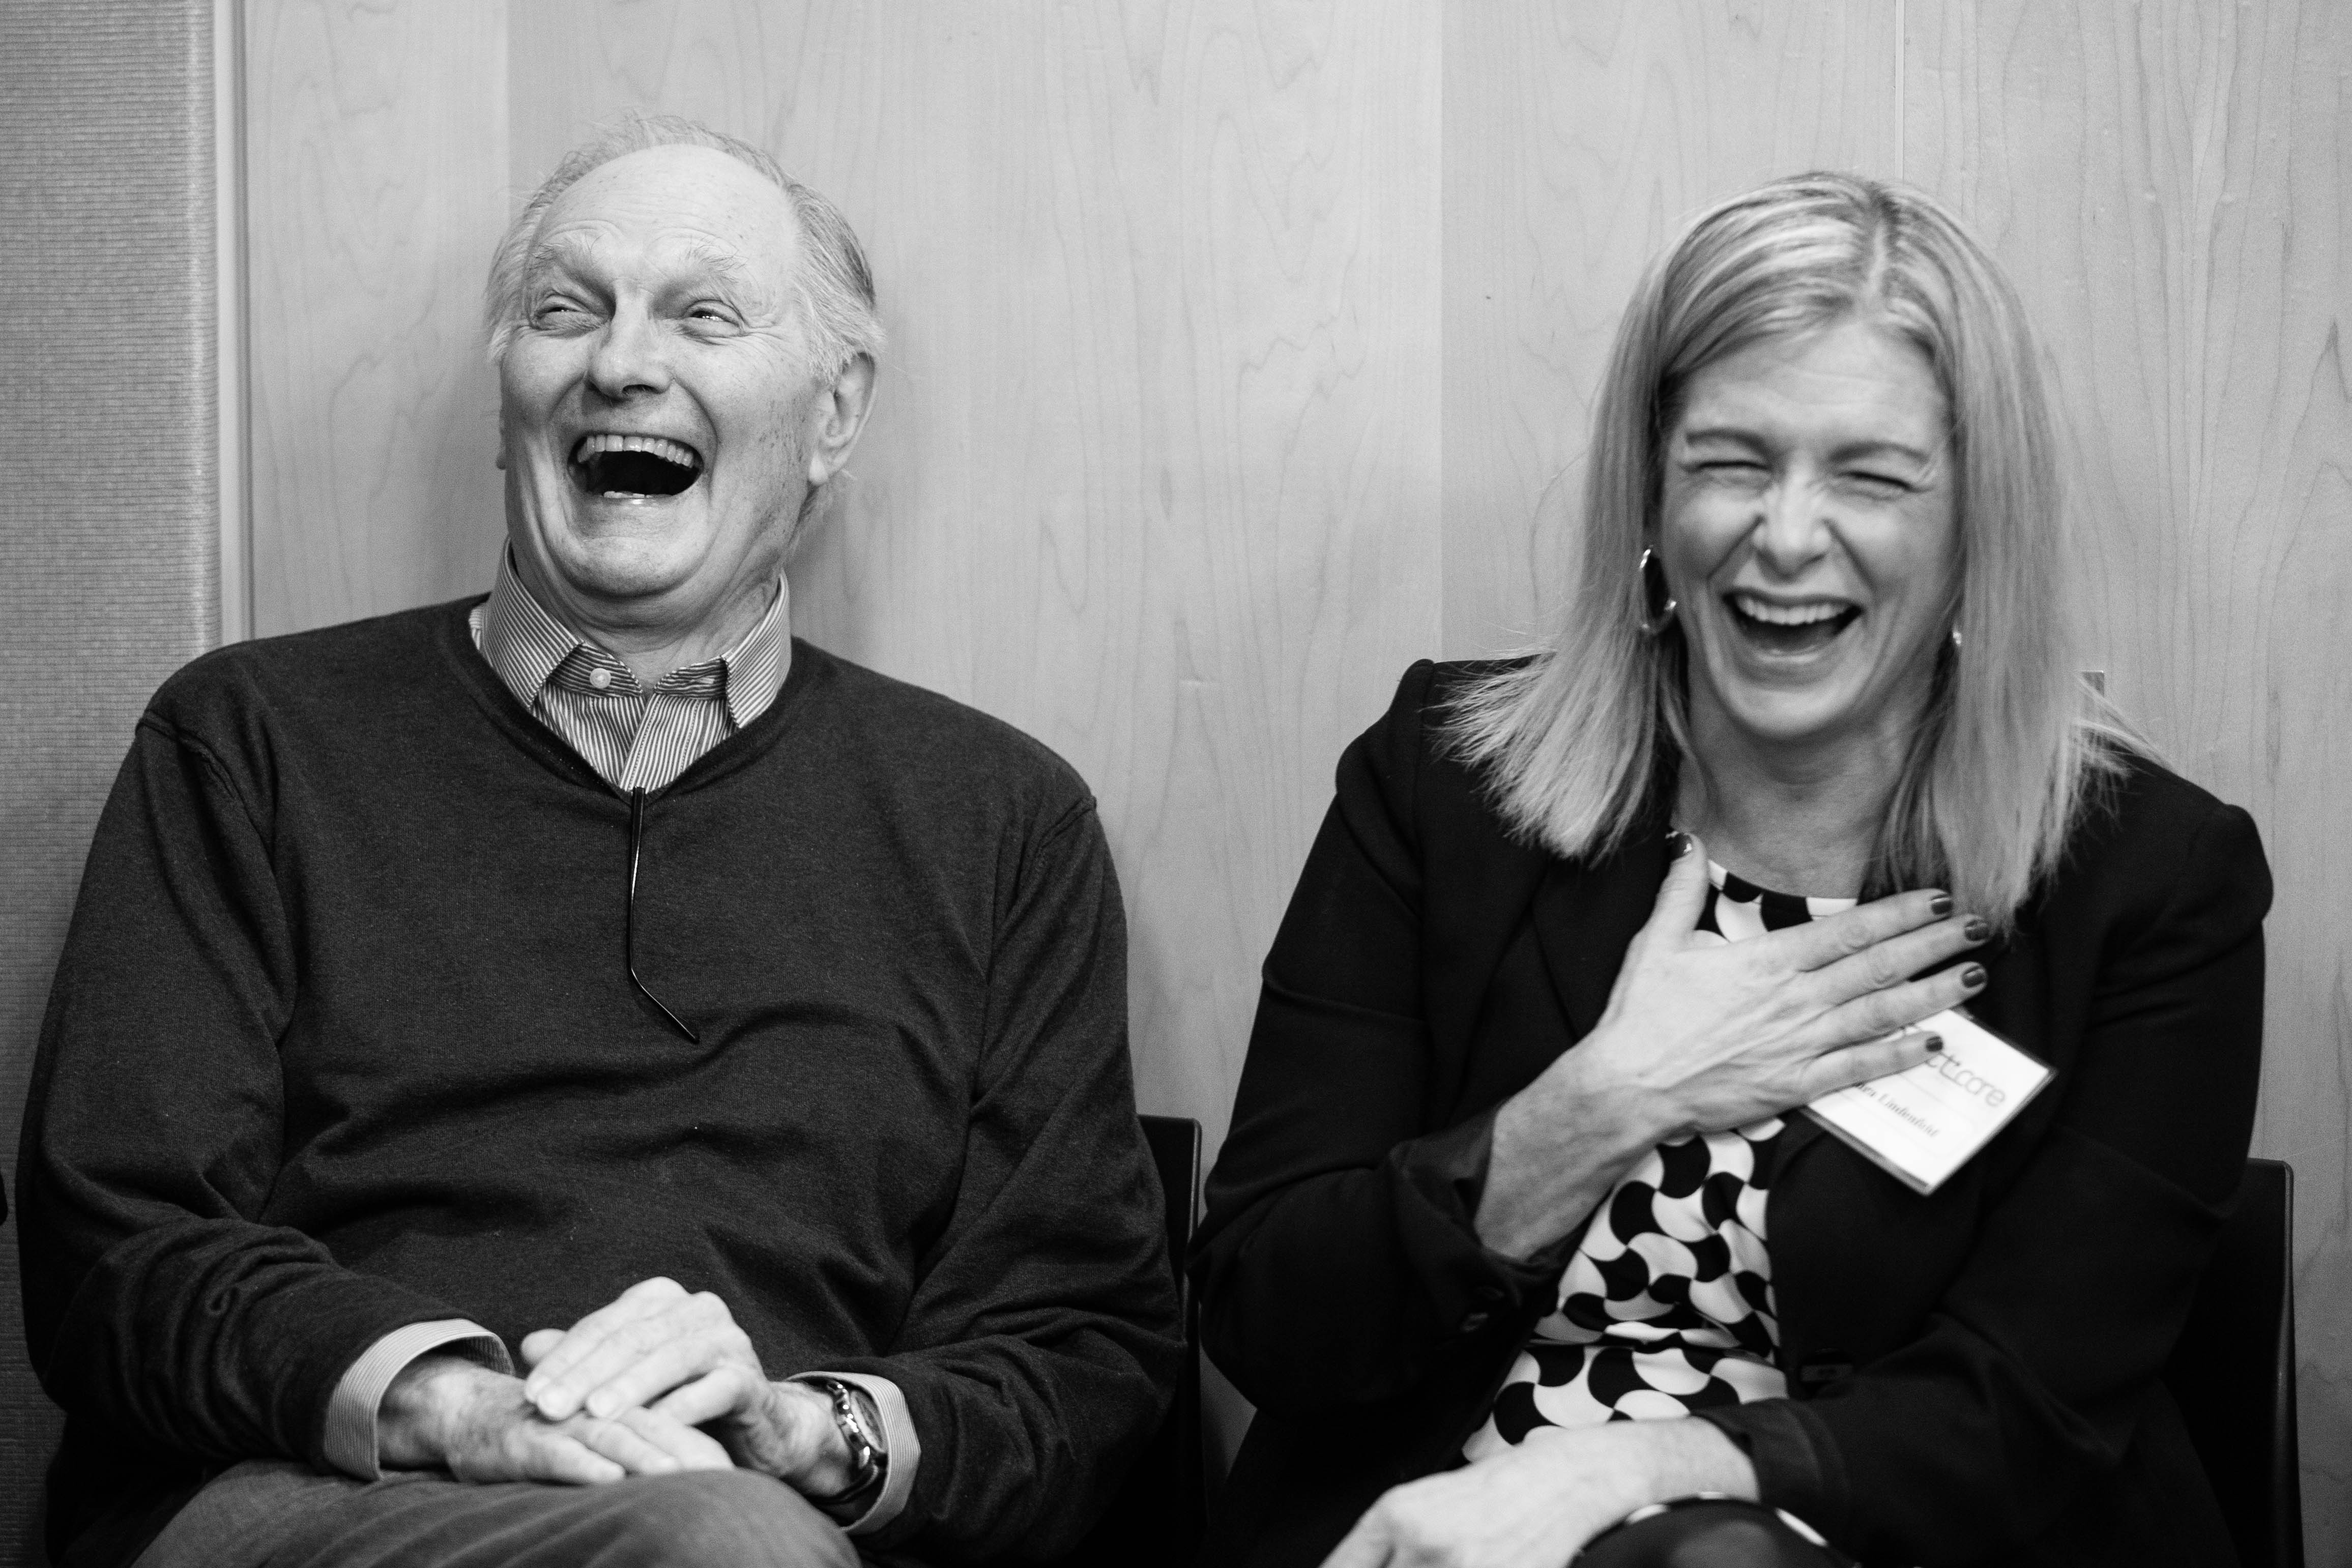 Alan Alda and Laura Lindenfeld laughing